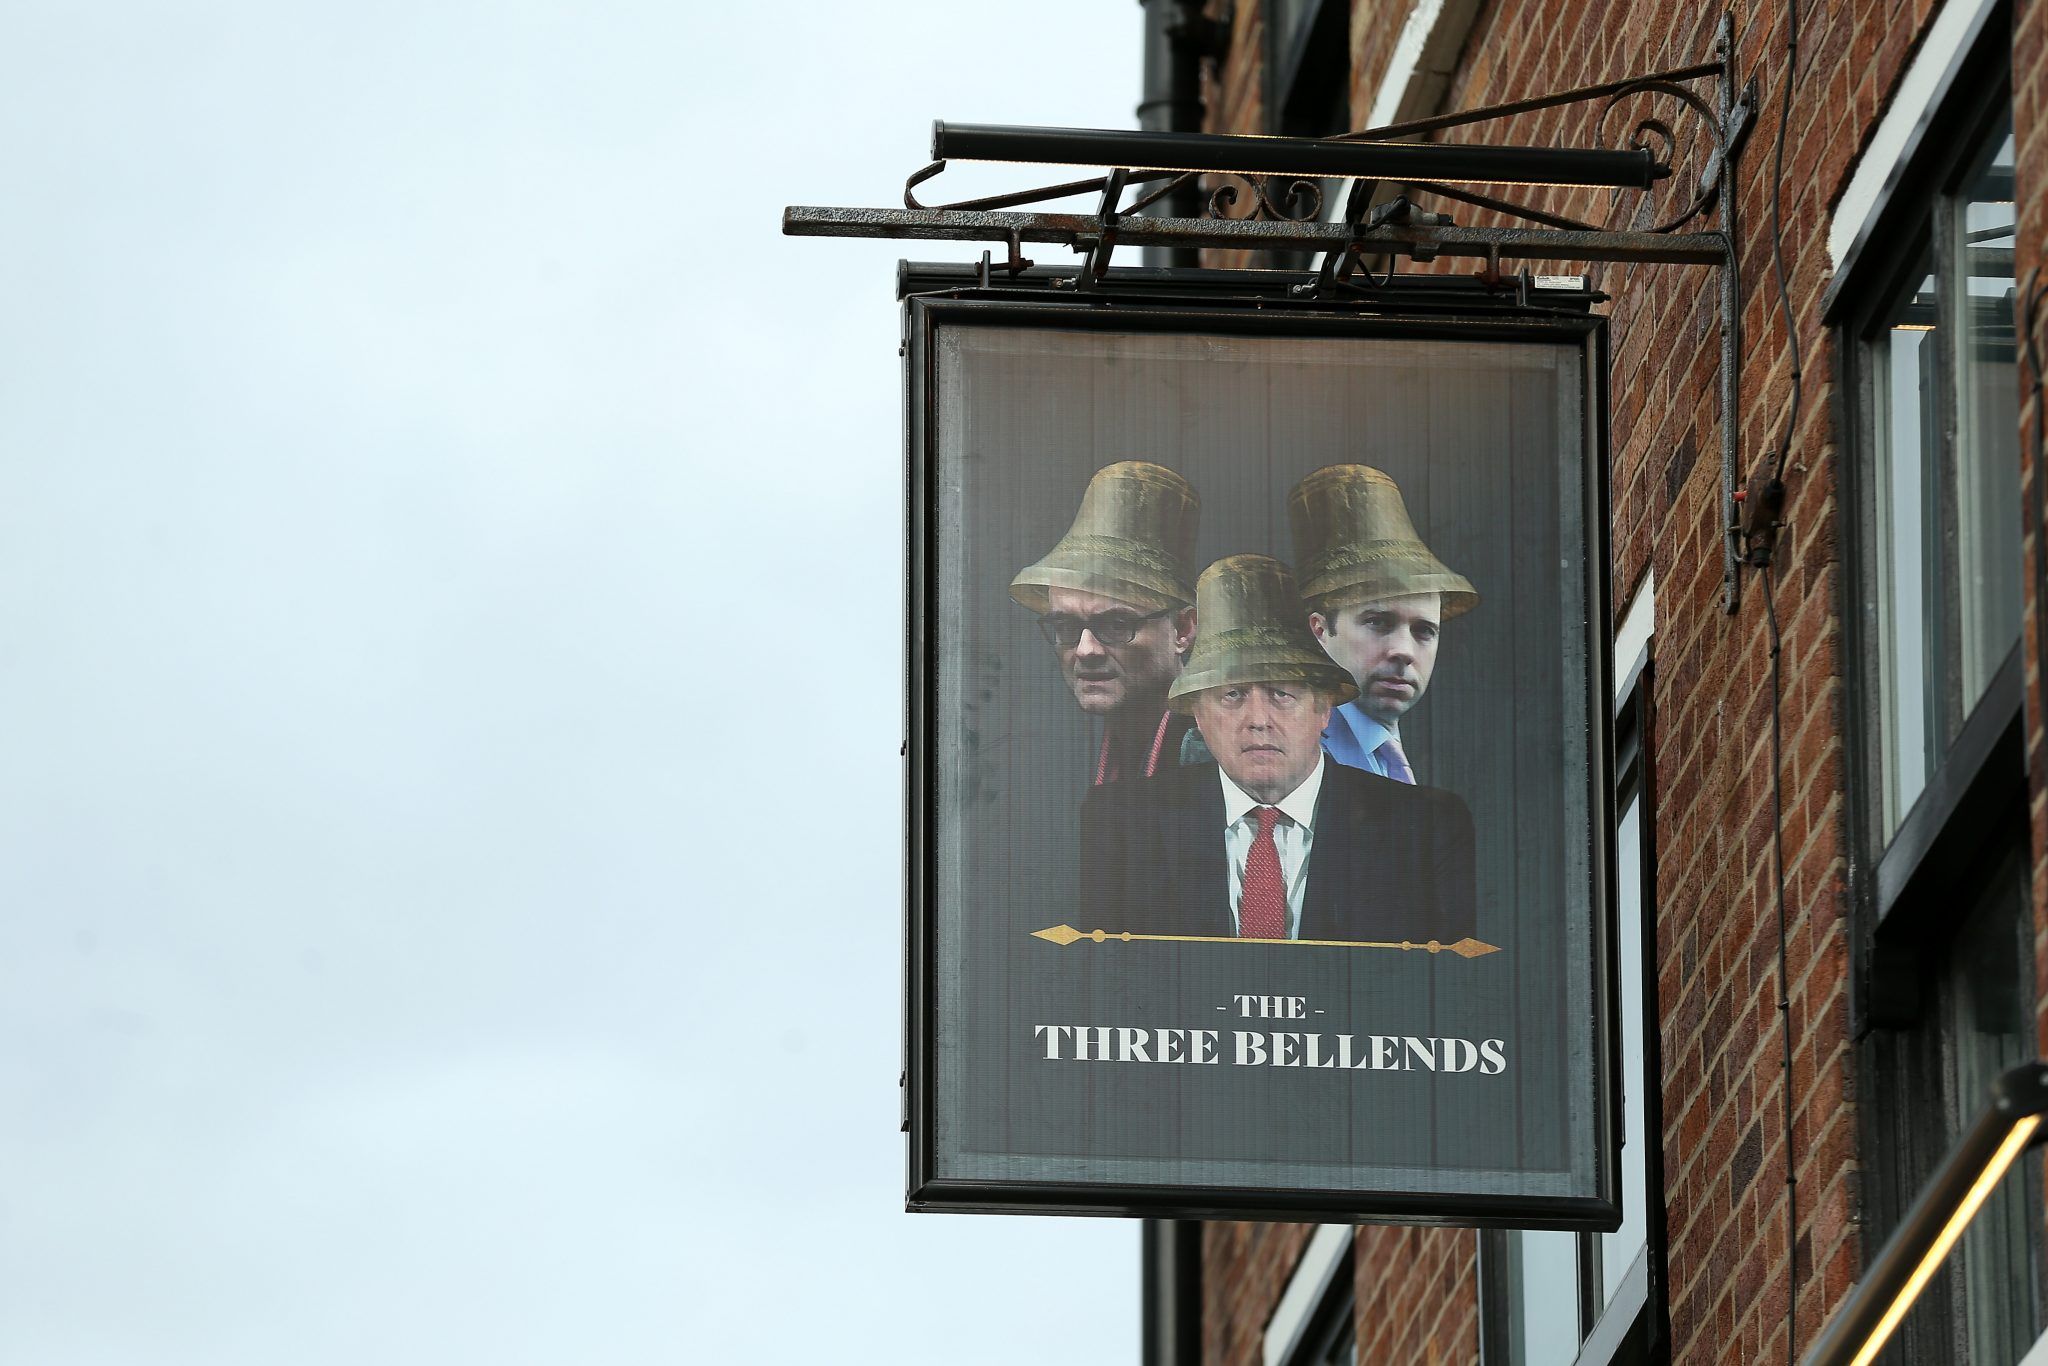 The Three Bellends pub in New Brighton, Merseyside